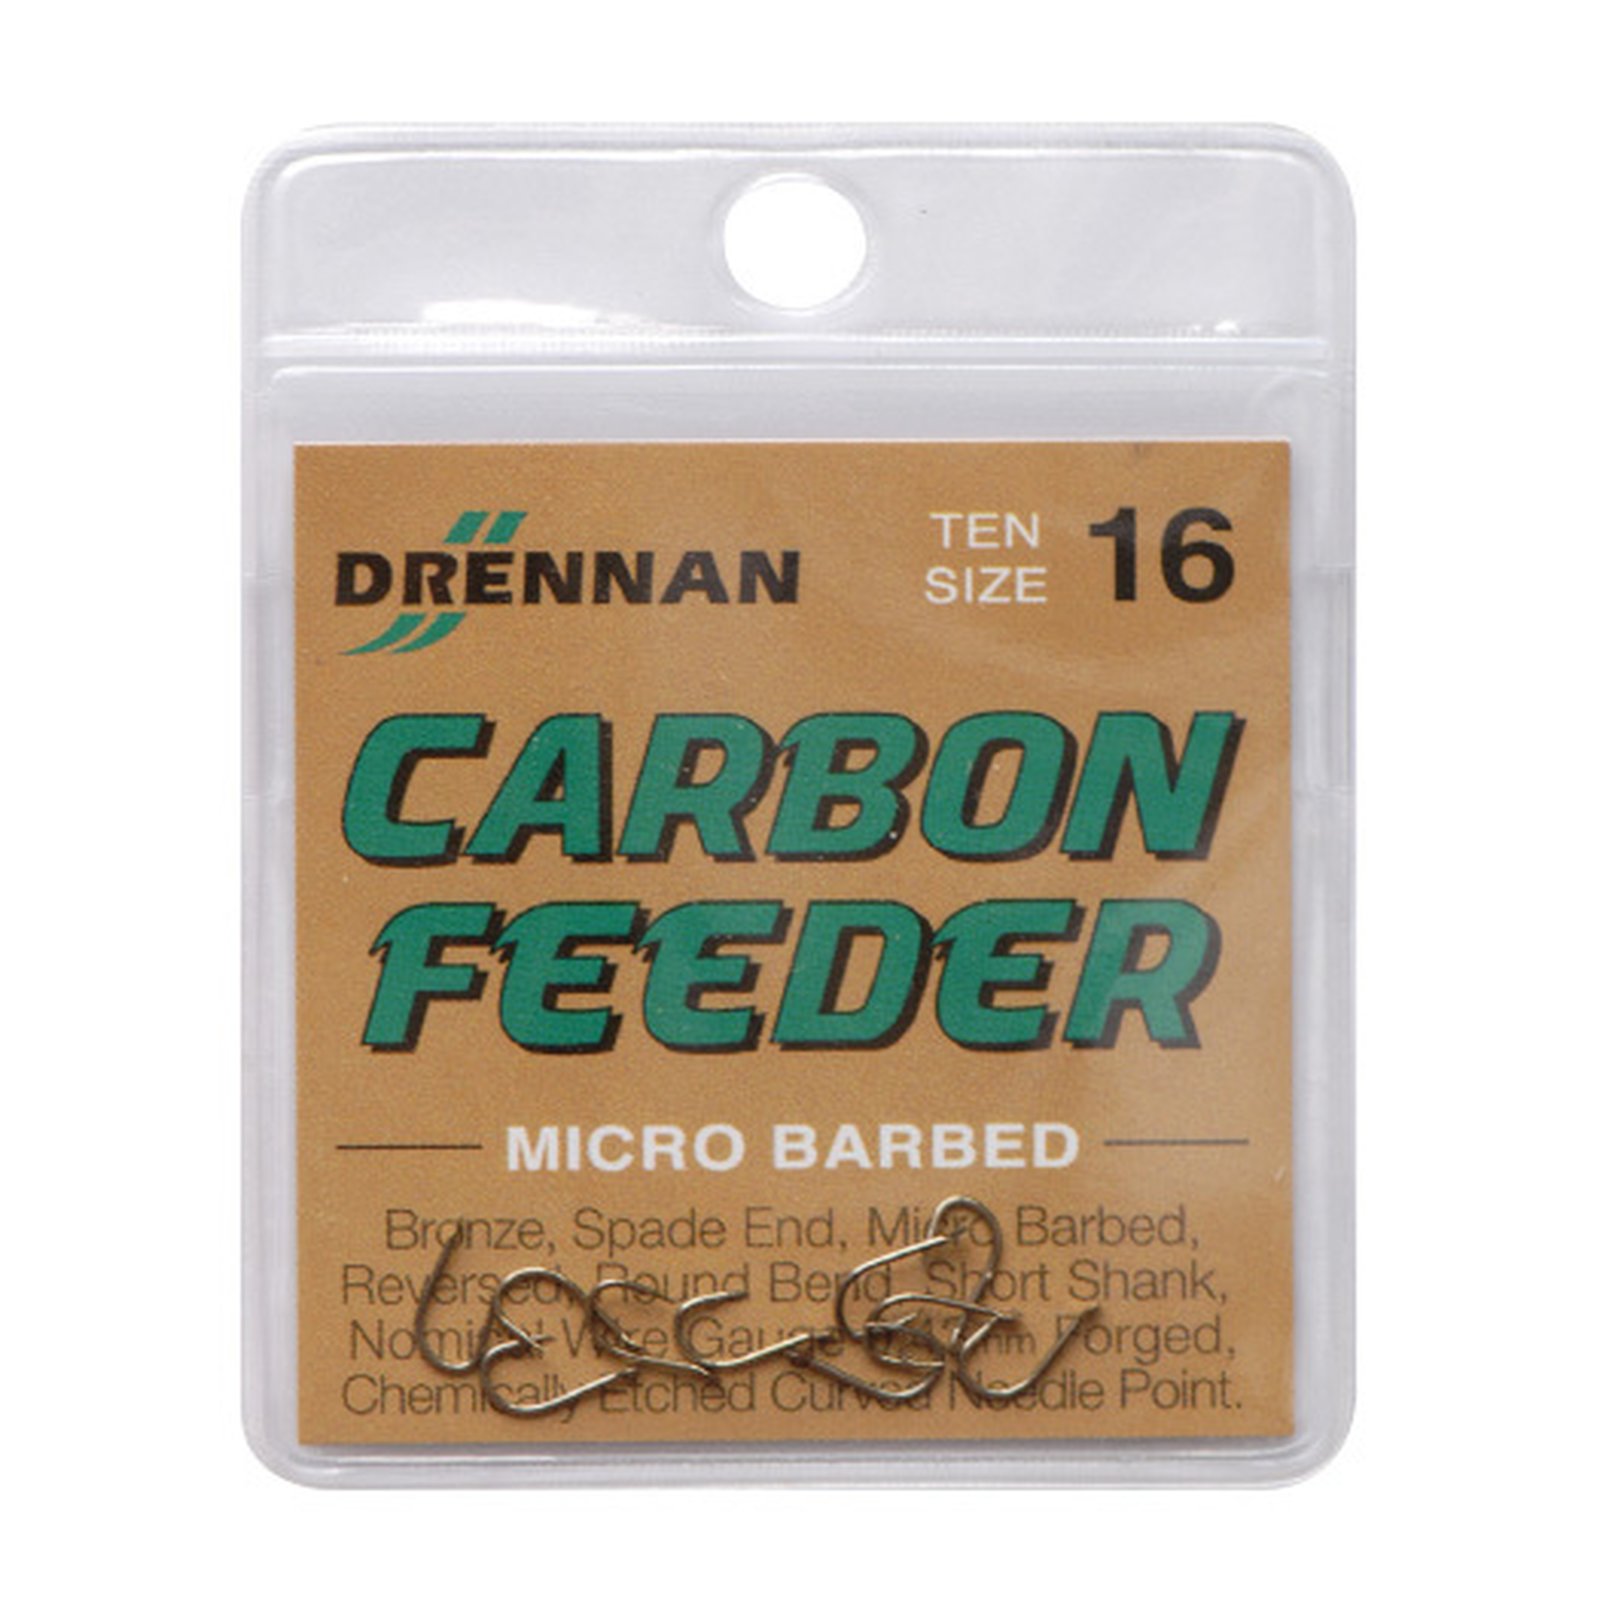 Drennan Carbon Feeder Micro Barbed 10 Stk. Gr.8